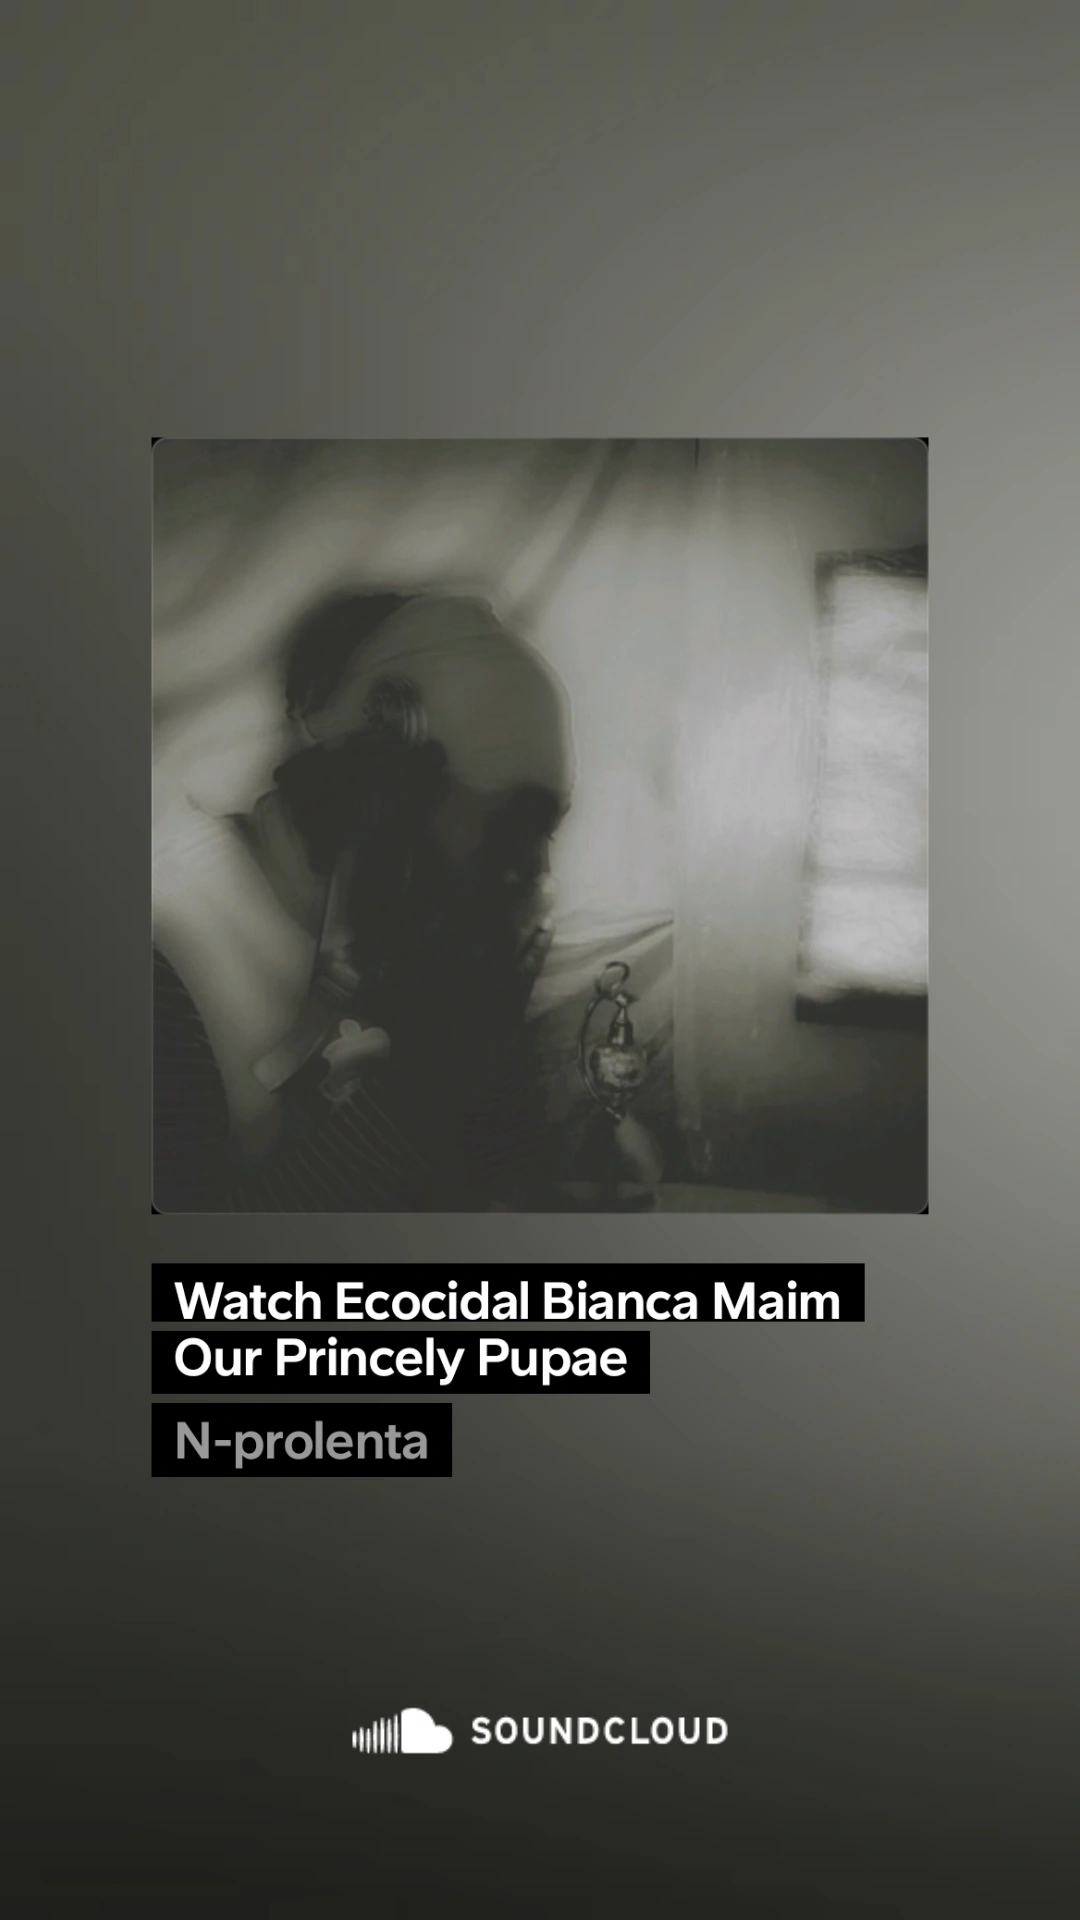 Performance - Parasymbol 6 of 7 Addendum: "Watch Ecocidal Bianca Maim Our Princely Pup" thumbnail